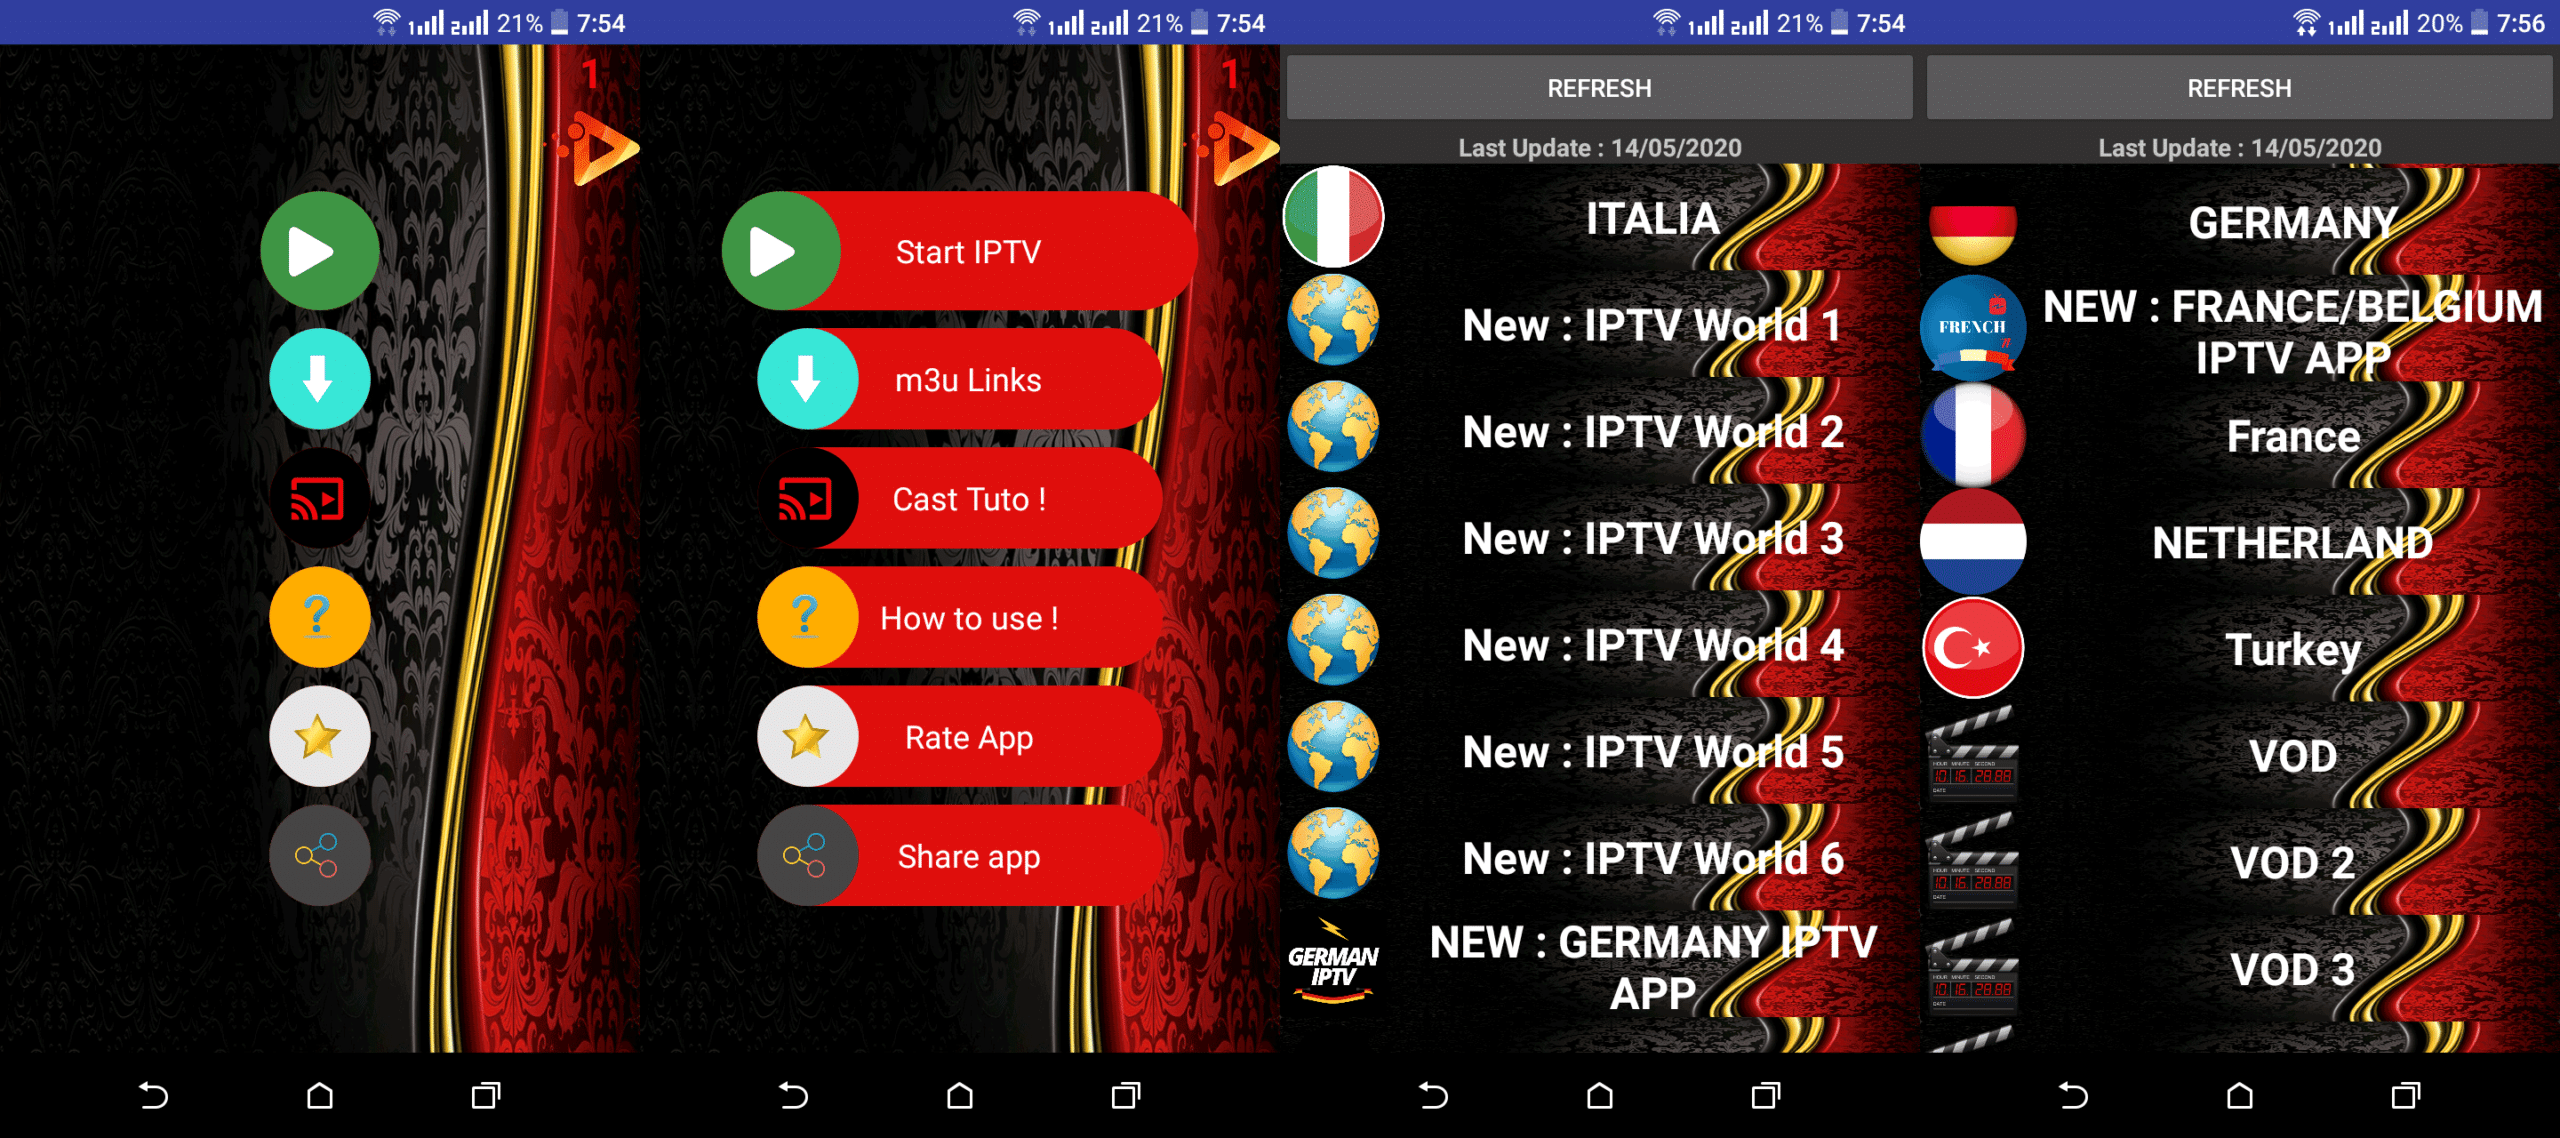 D4PTV v15 APK Latest Android